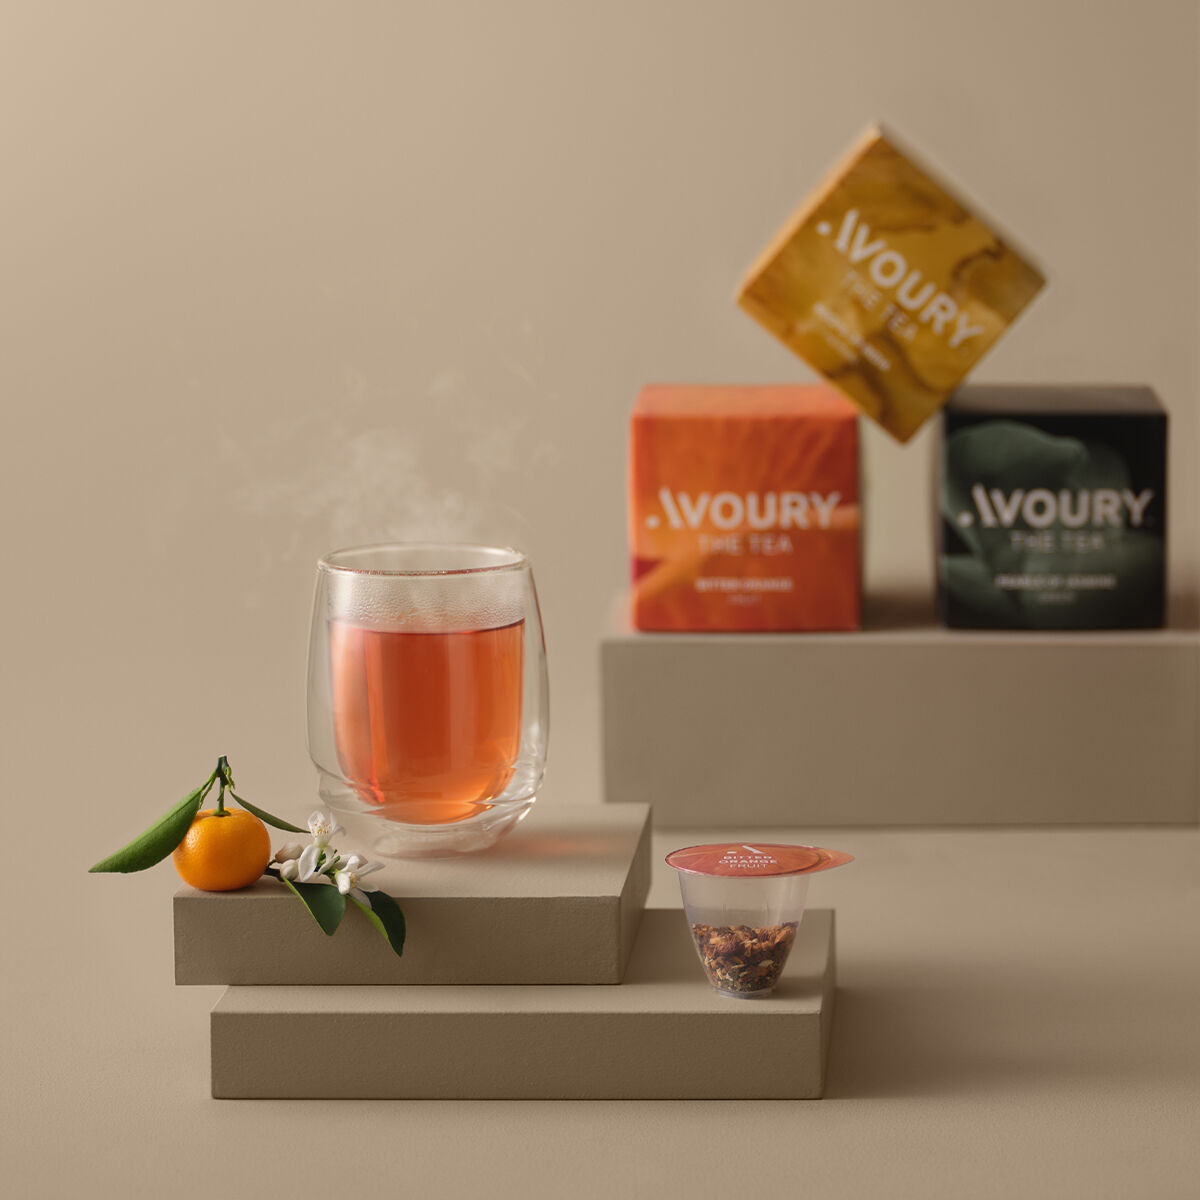 tea glass and Avoury tea boxes